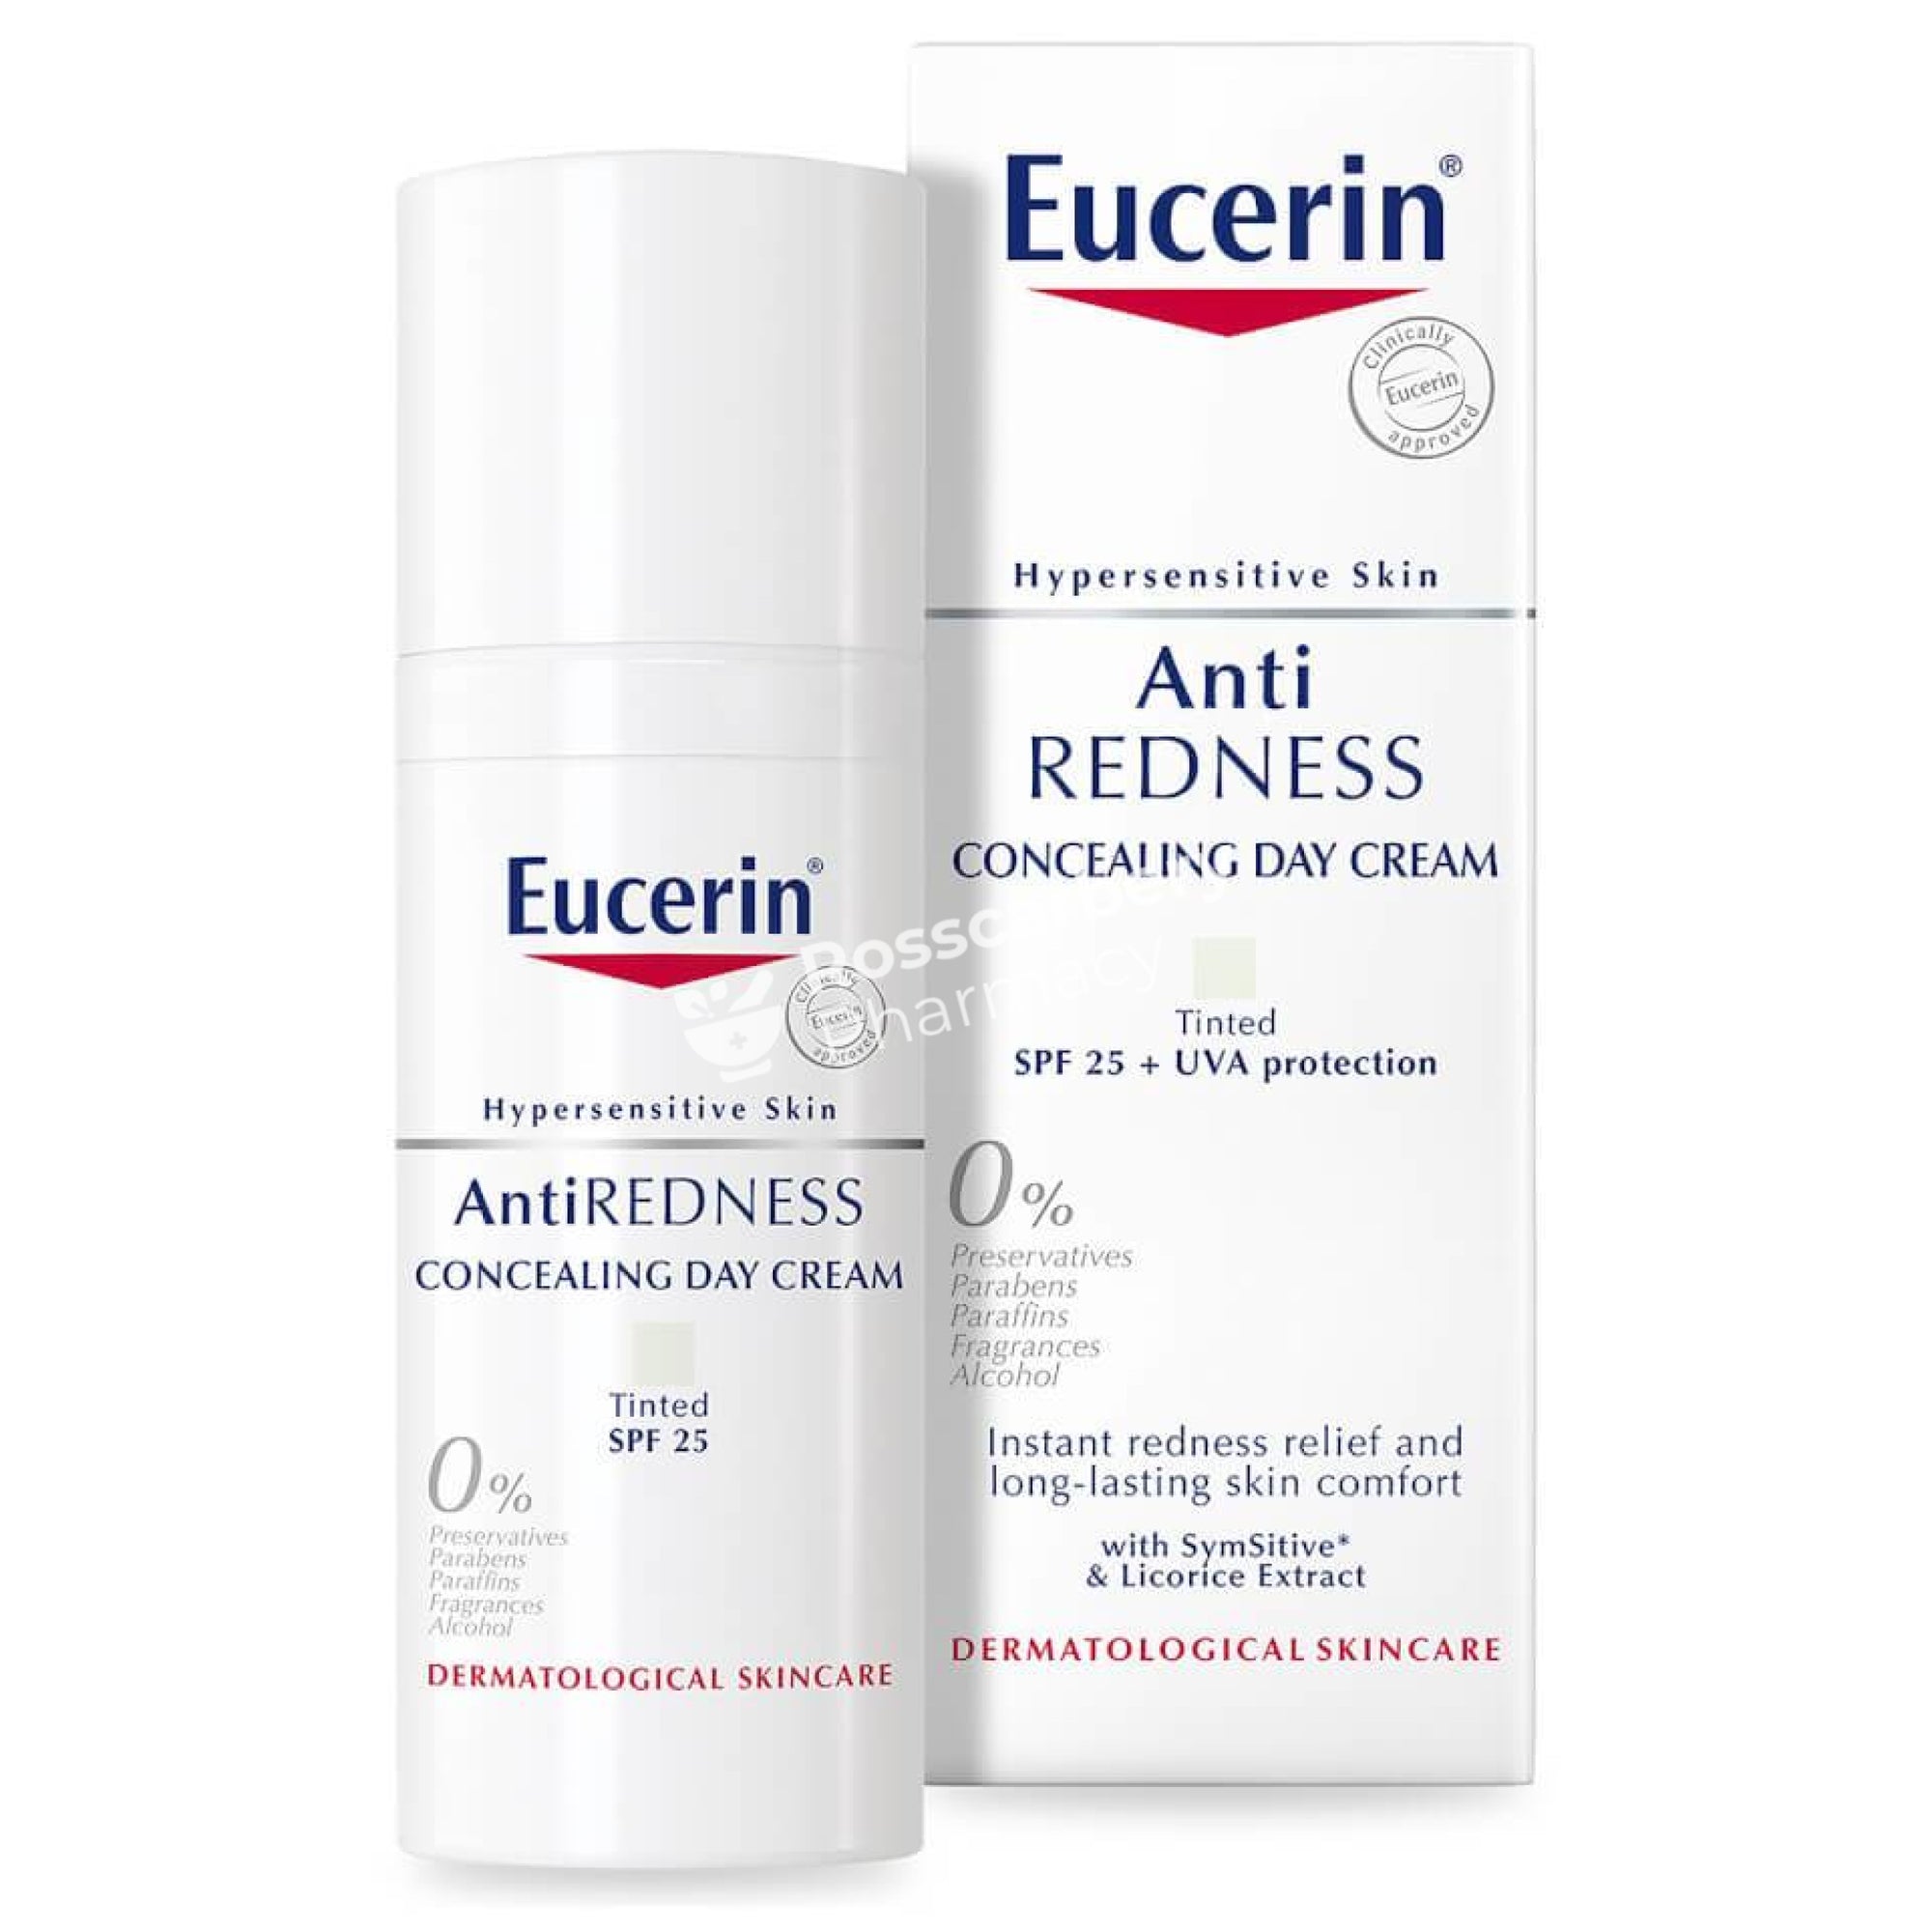 Eucerin Hypersensitive Skin Anti Redness Concealing Day Cream (Tinted) Facial Moisturiser